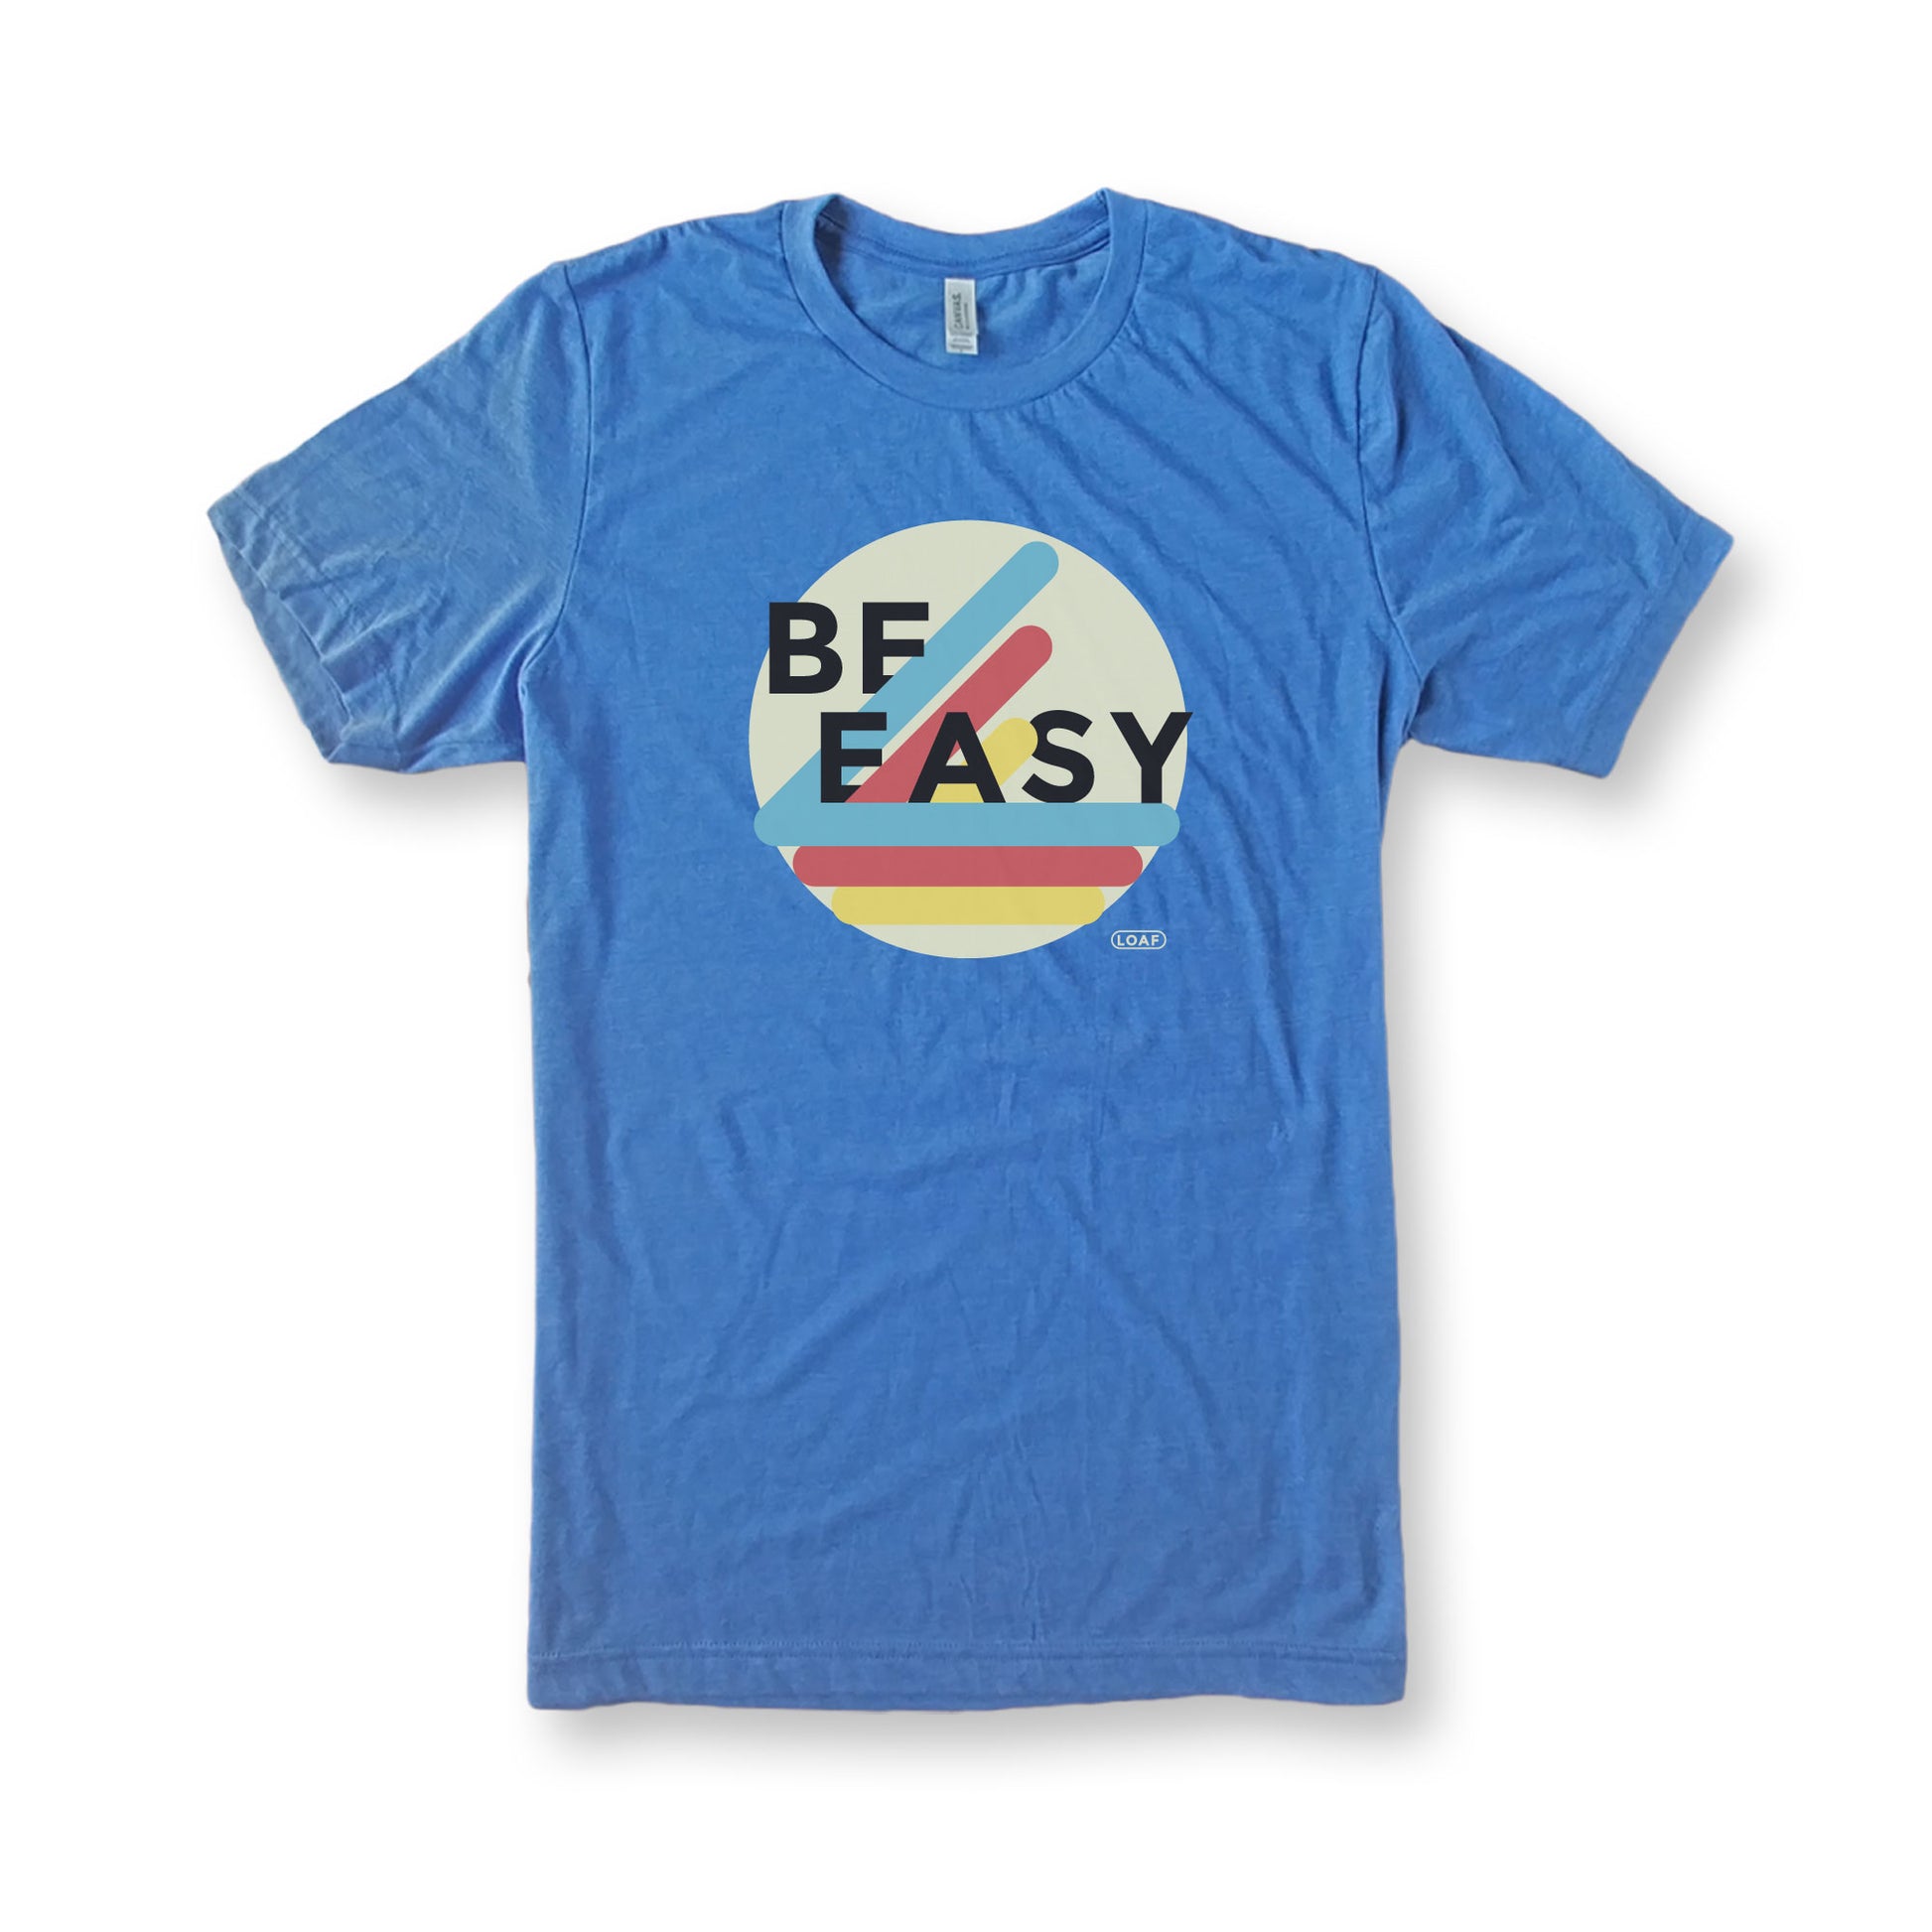 Vintage Be Easy T shirt for men or women Bella Canvas Super soft Heather Royal Blue shirt